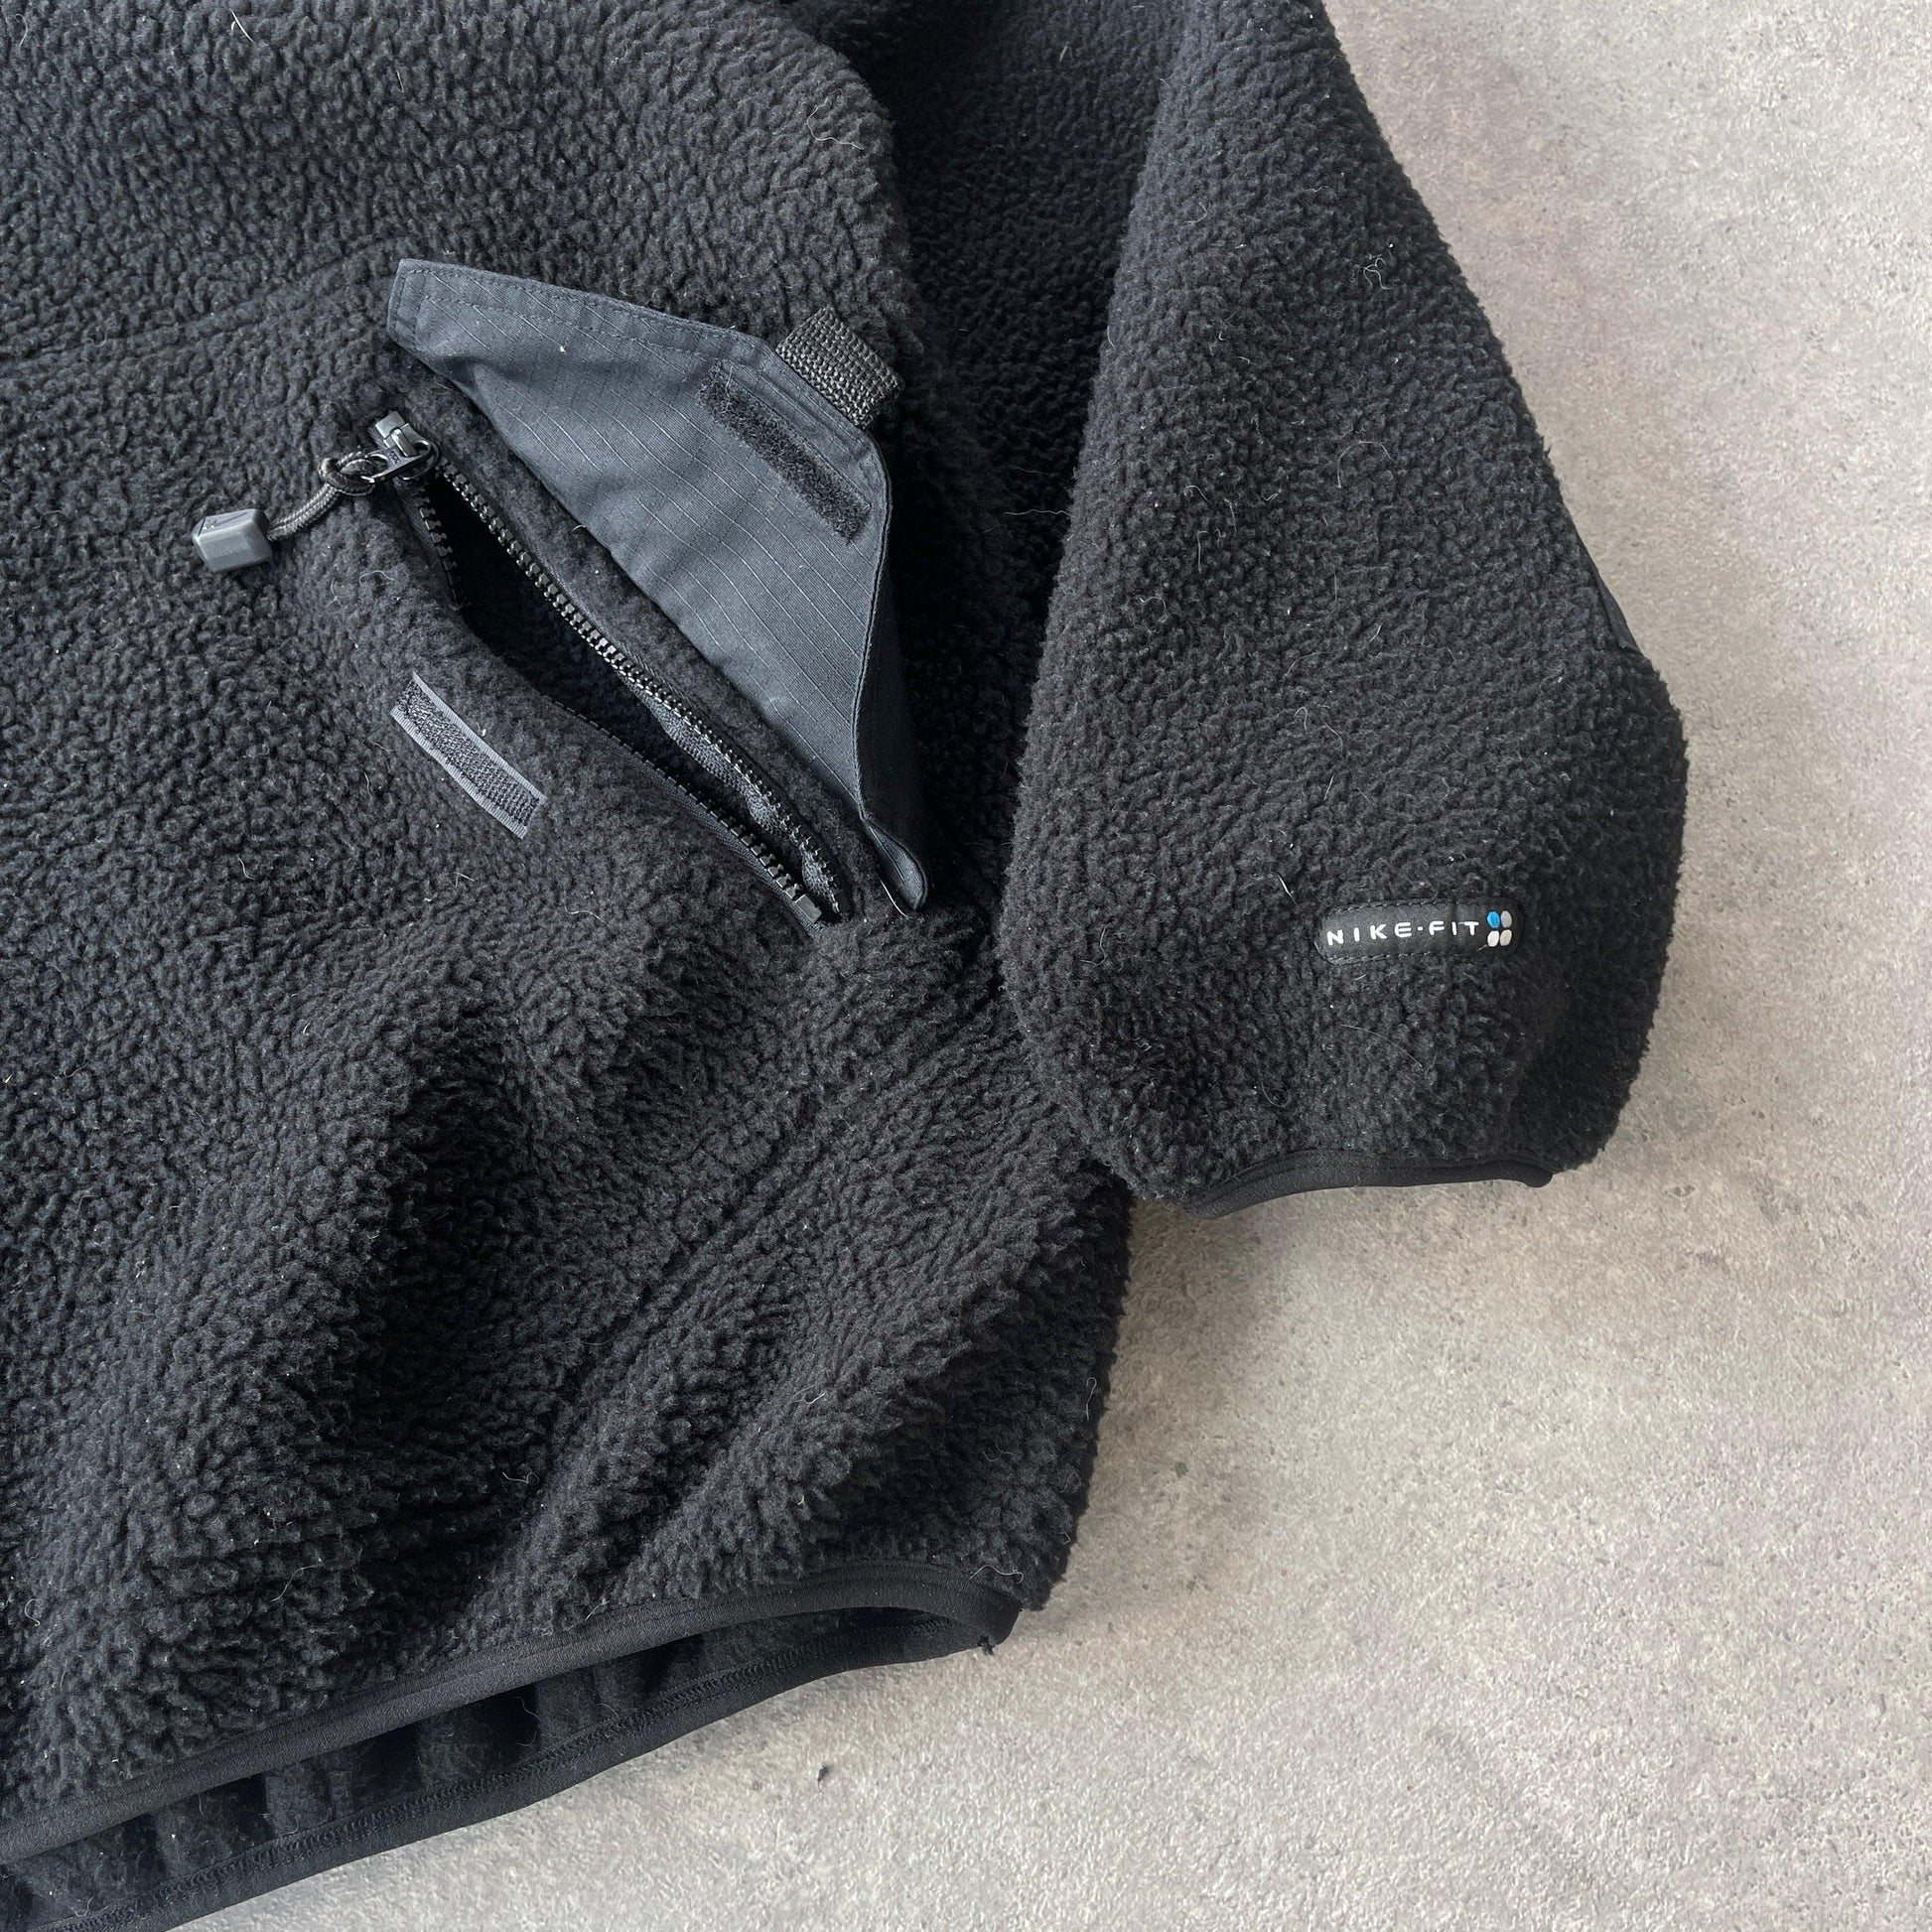 Nike ACG RARE 1998 balaclava sherpa fleece jacket (M) - Known Source